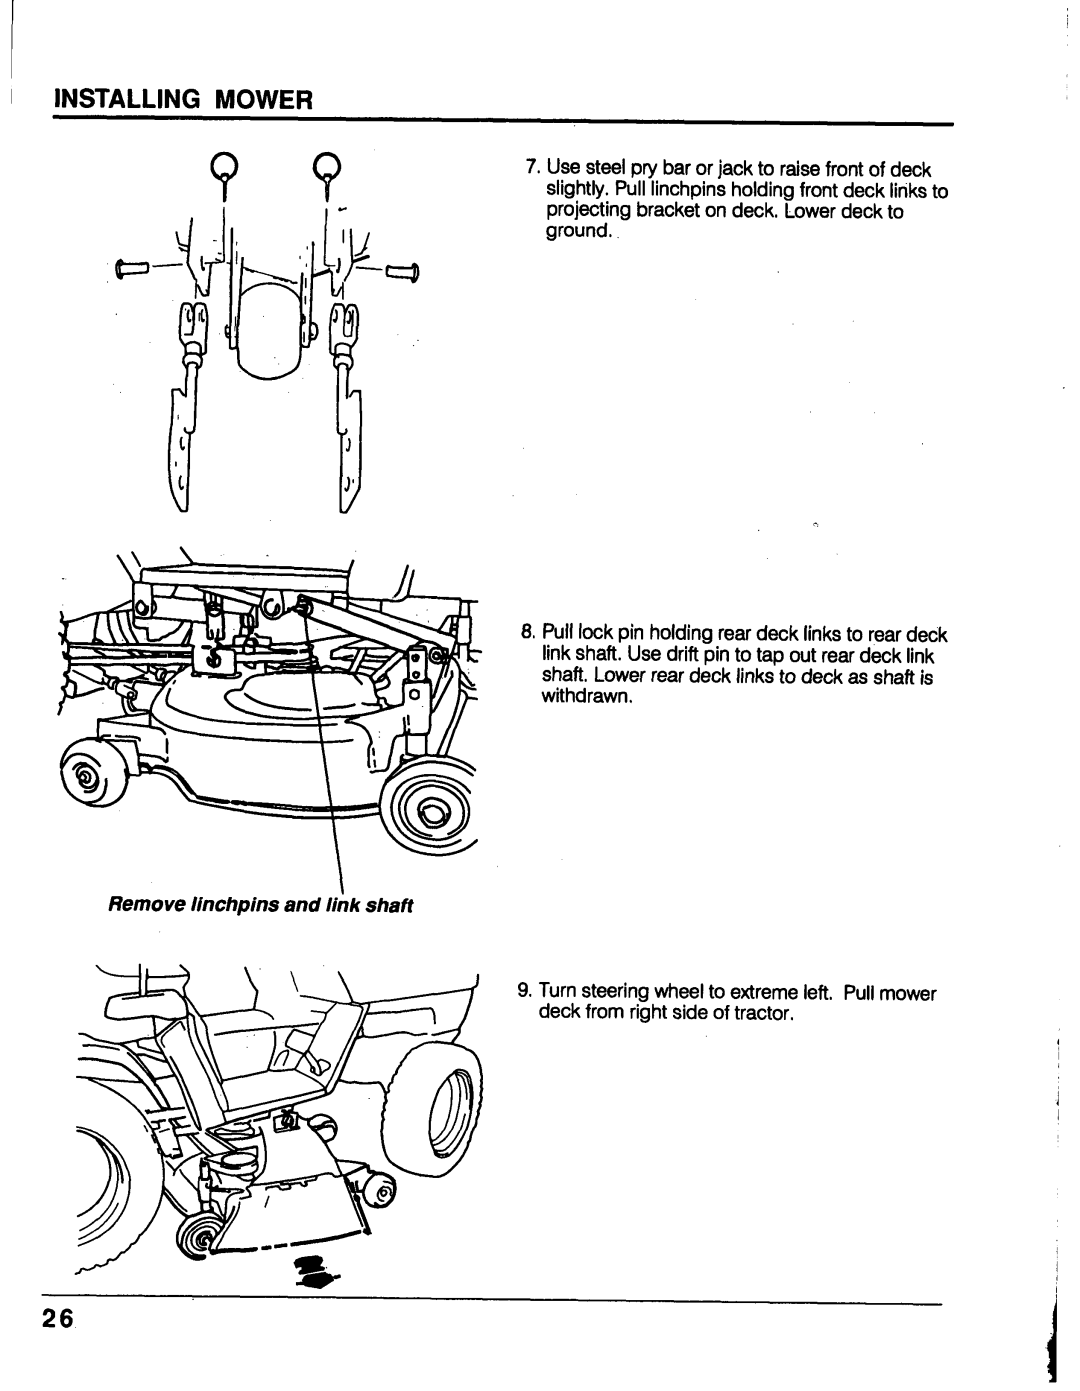 Honda Power Equipment MM52 manual Remove linchpins and link shaft 